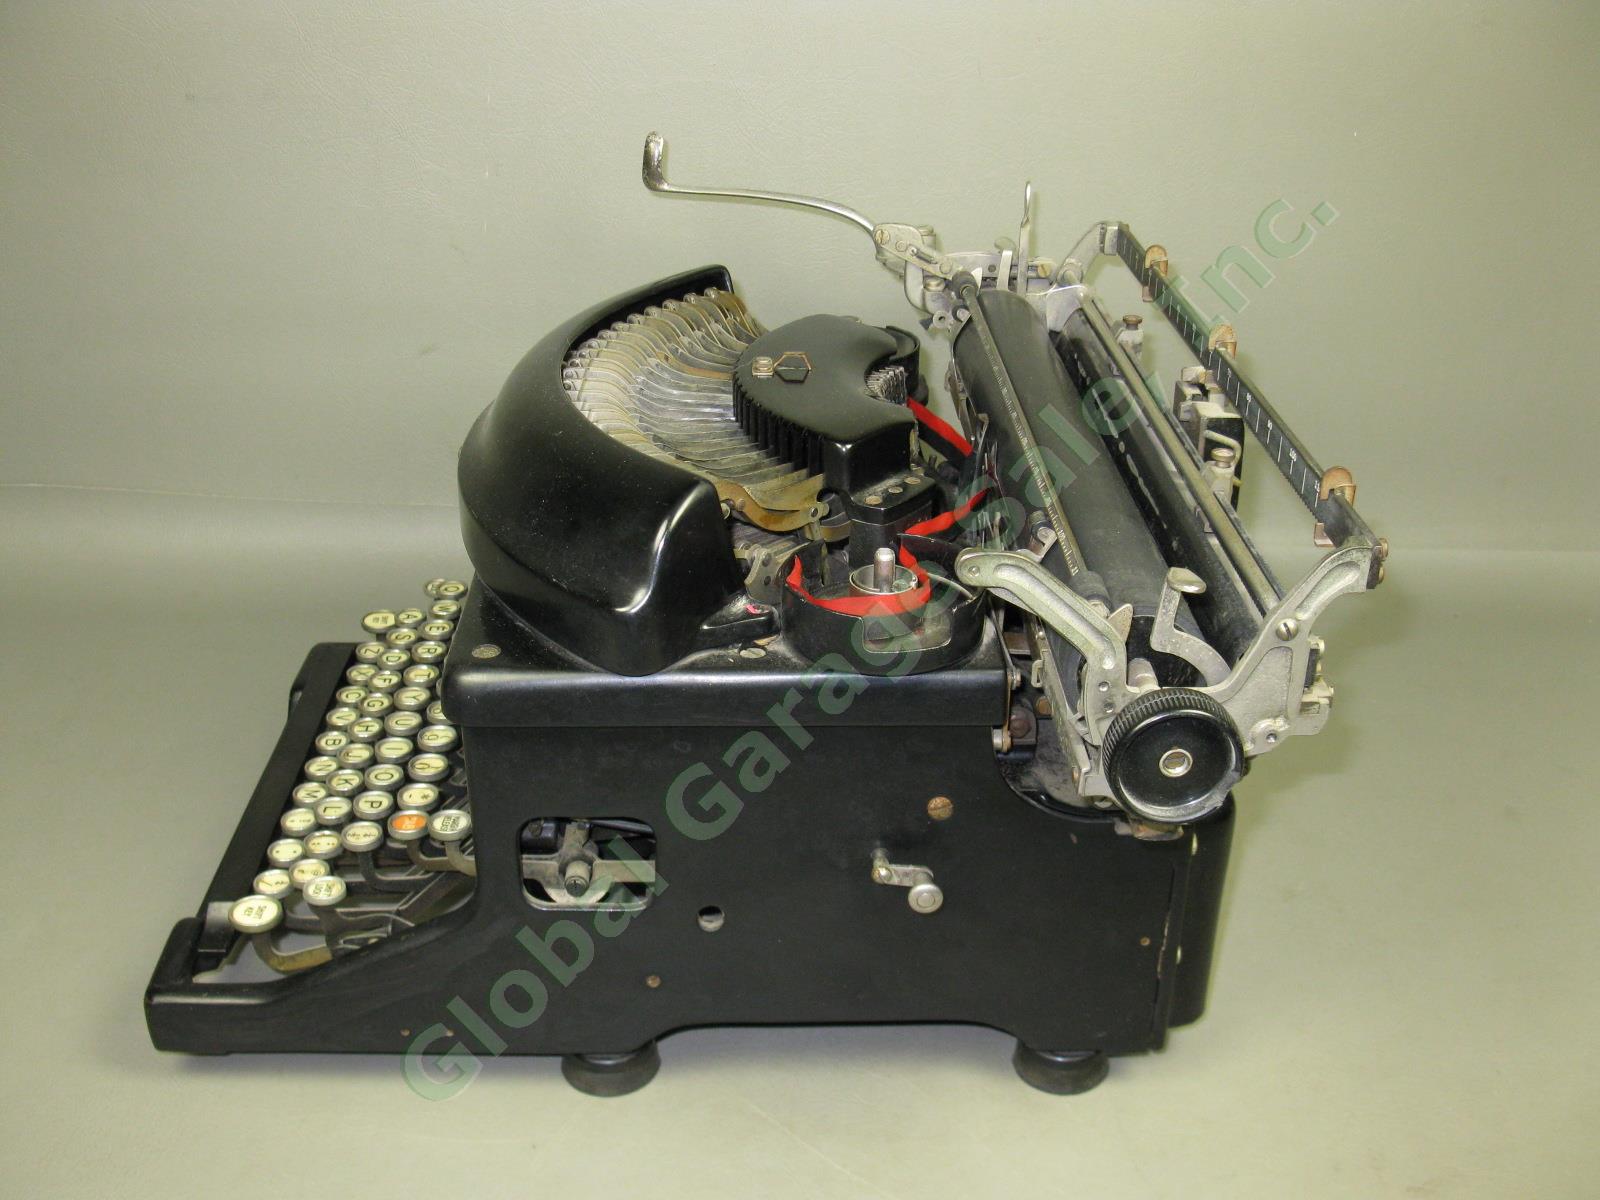 Vtg Antique 1929 Remington Noiseless 6 Manual Typewriter Serial X117909 Cleaned 4